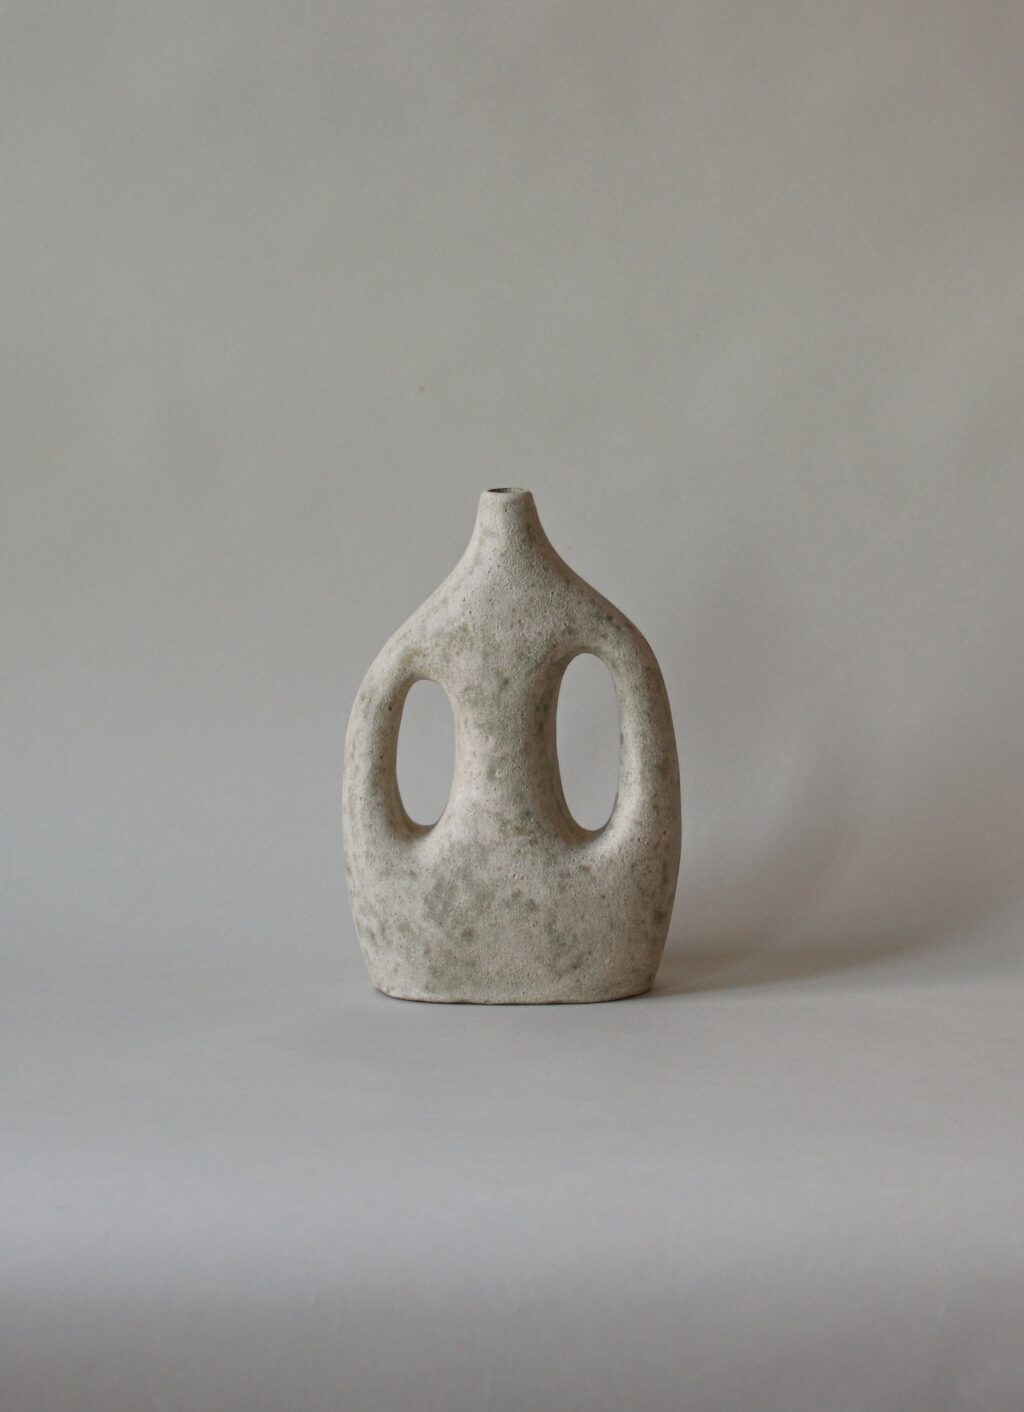 Viv Lee - Handmade stoneware vessel - Sympoiesis IV - Medium stone